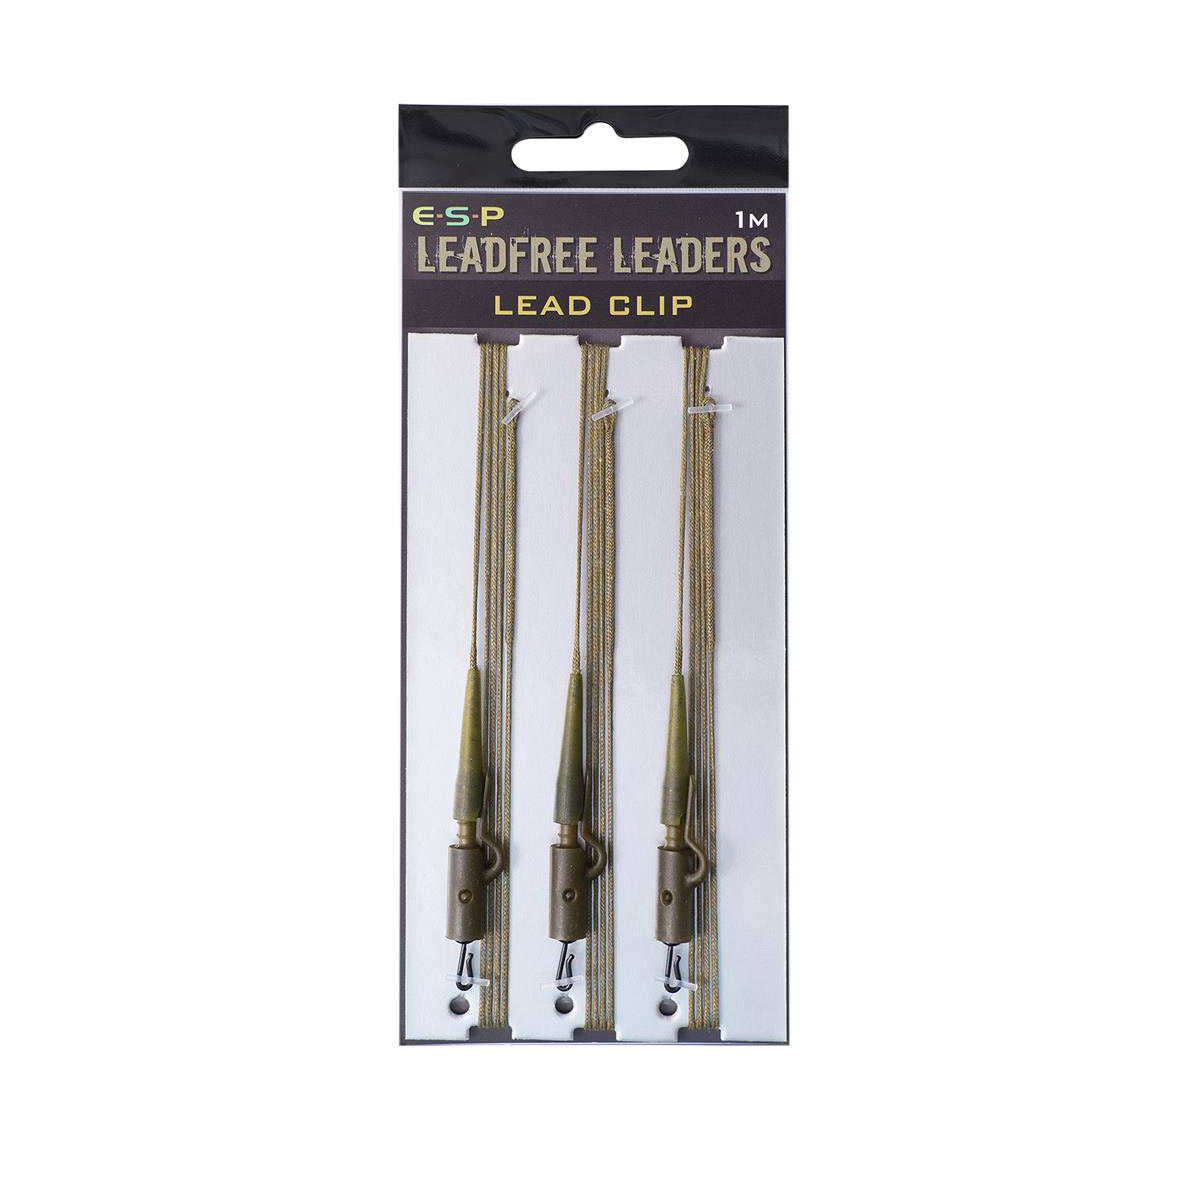 ESP Lead Free Leadclip 1M -  Green.